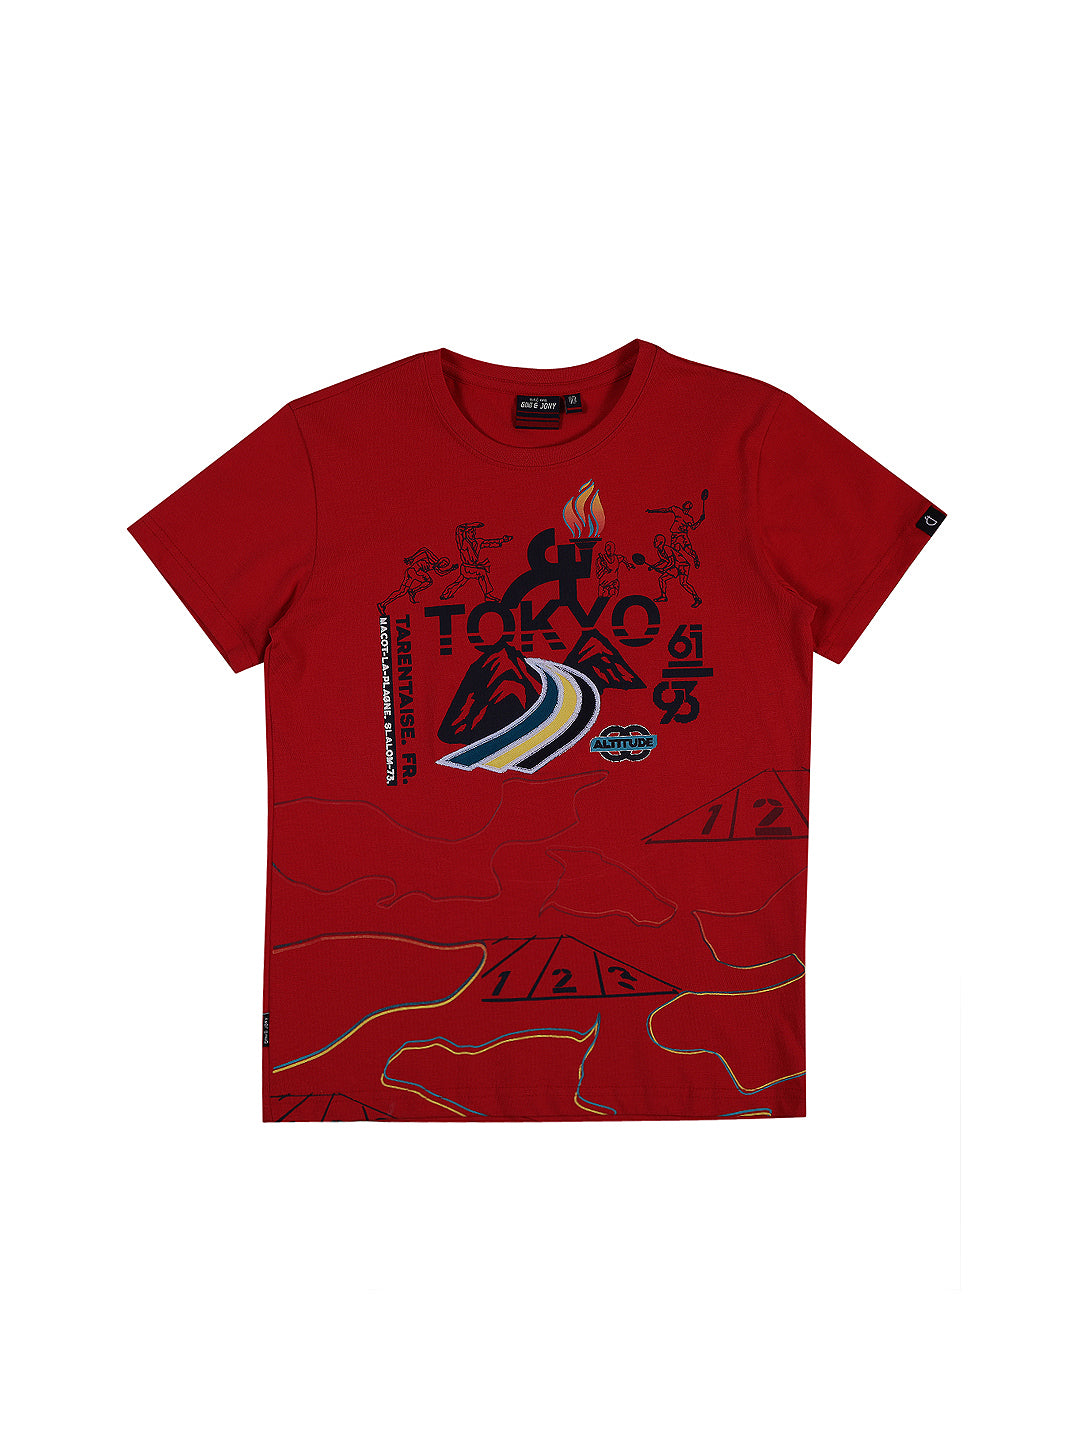 Boys Red Printed Cotton T-Shirt